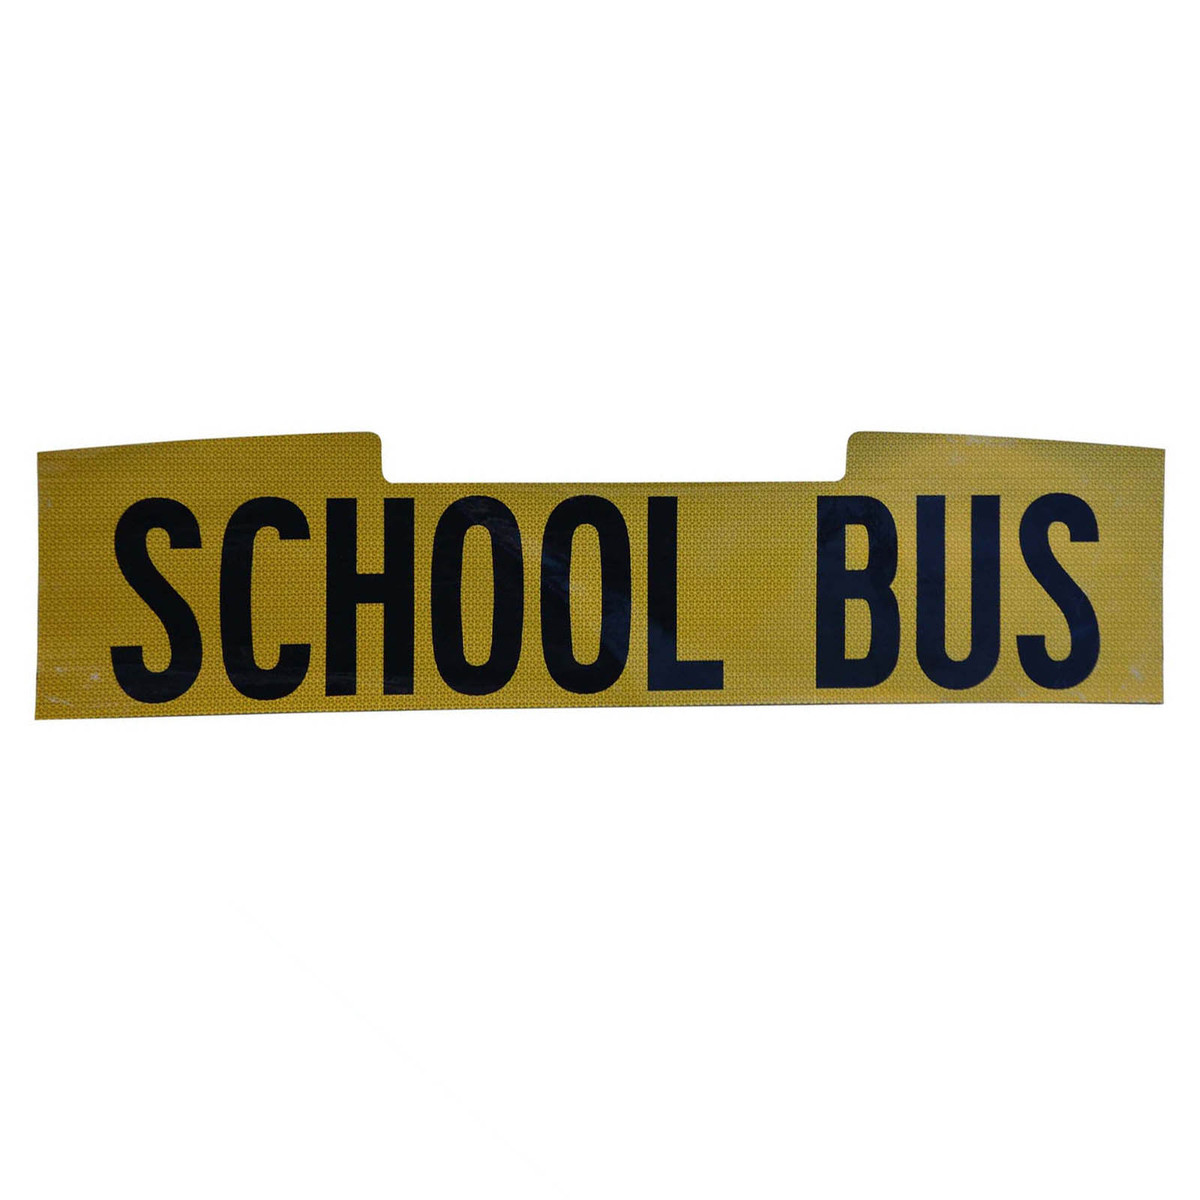 School Bus REAR Reflective Decal C2